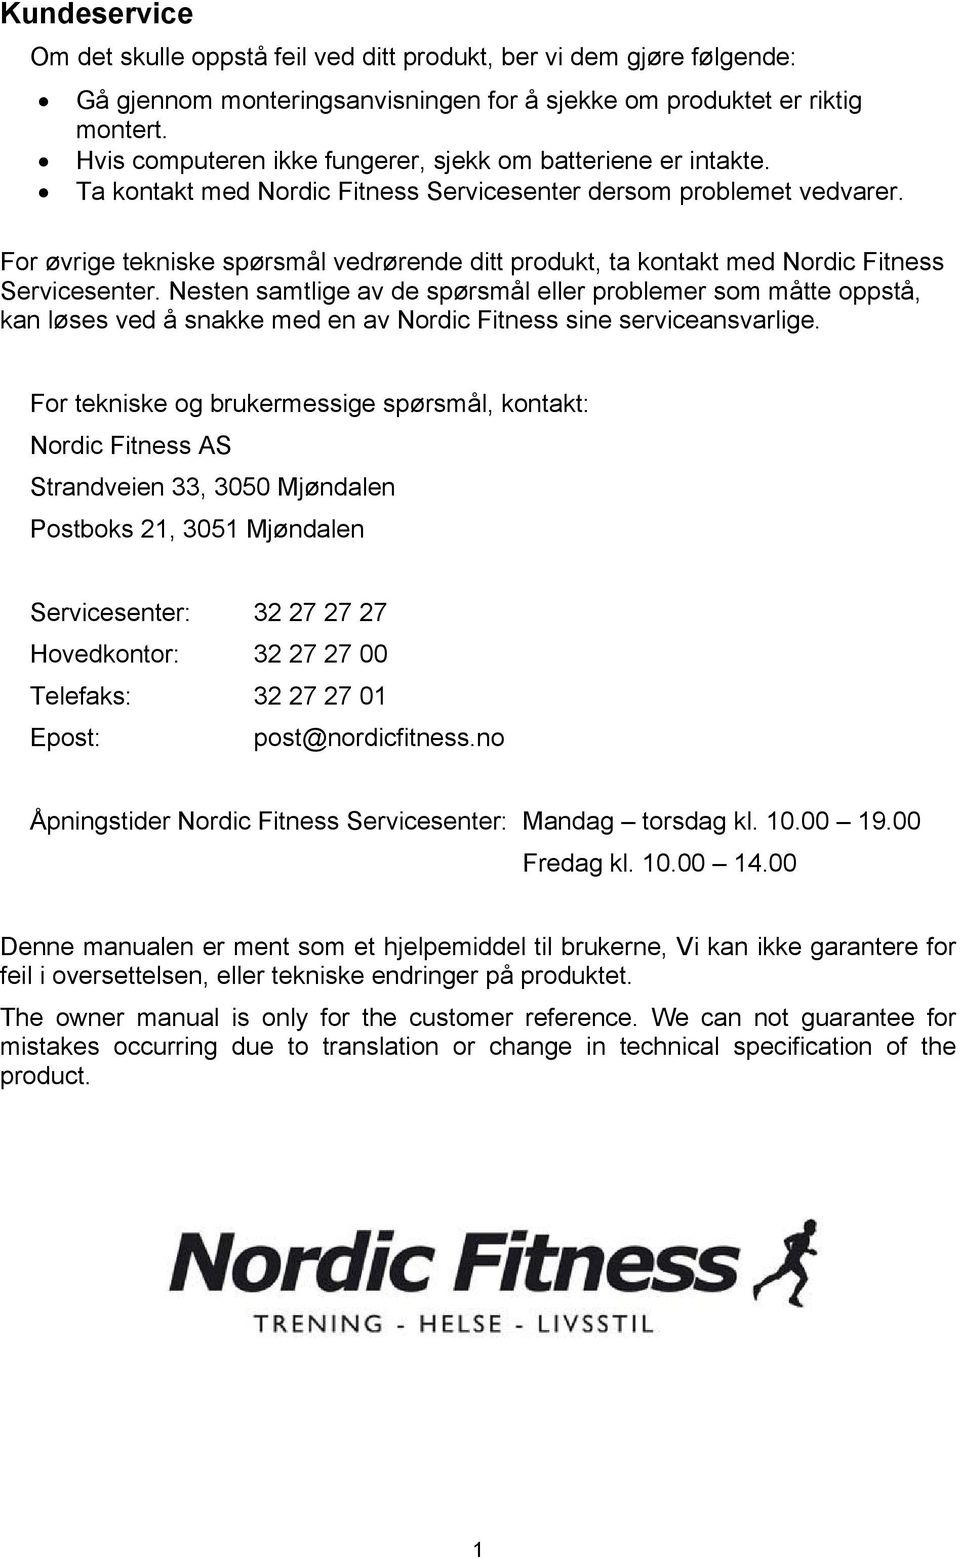 For øvrige tekniske spørsmål vedrørende ditt produkt, ta kontakt med Nordic Fitness Servicesenter.